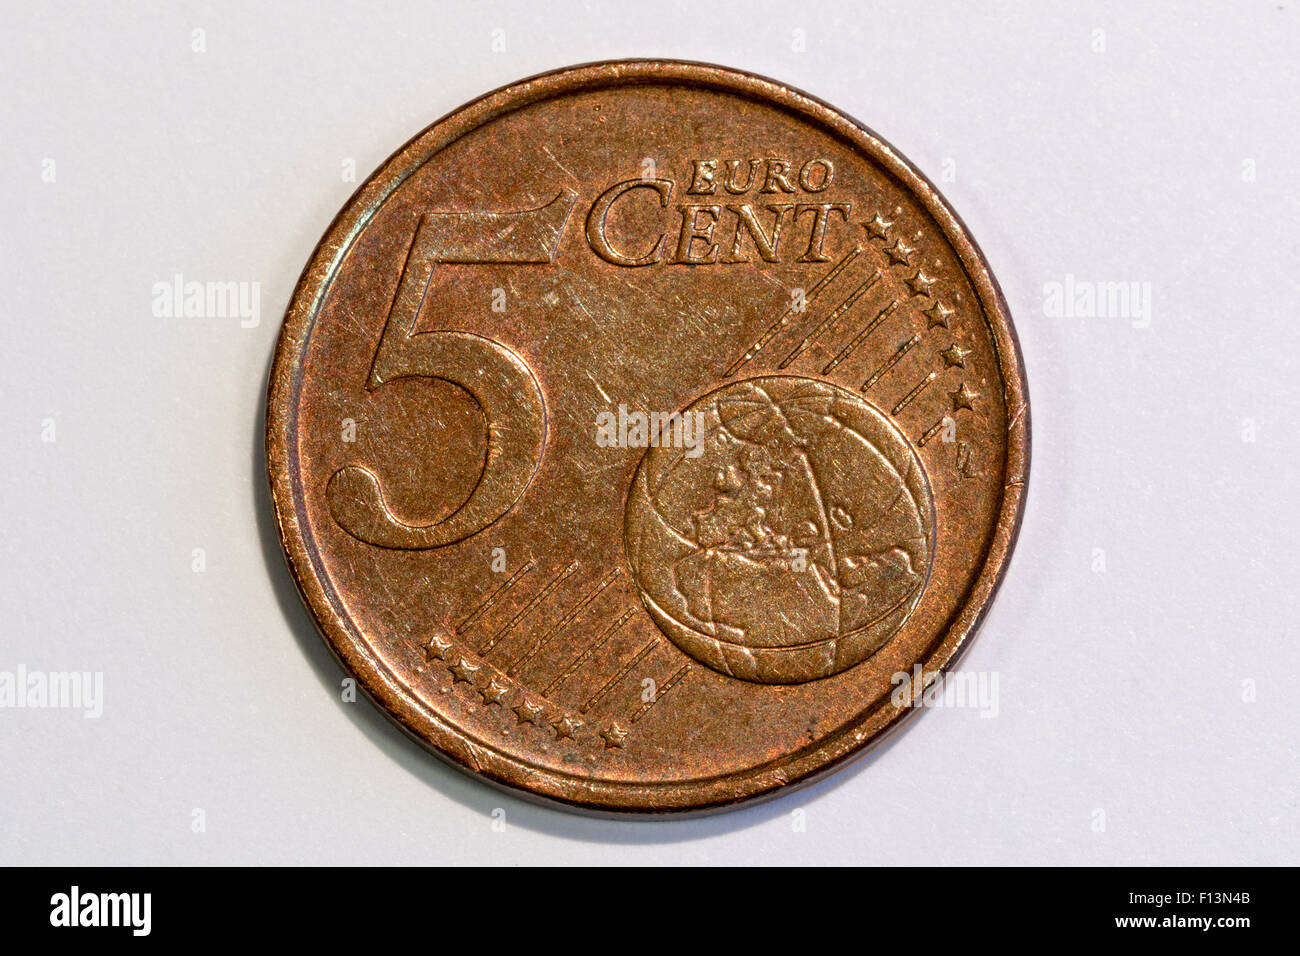 Copper 5 Euro cents coin Stock Photo